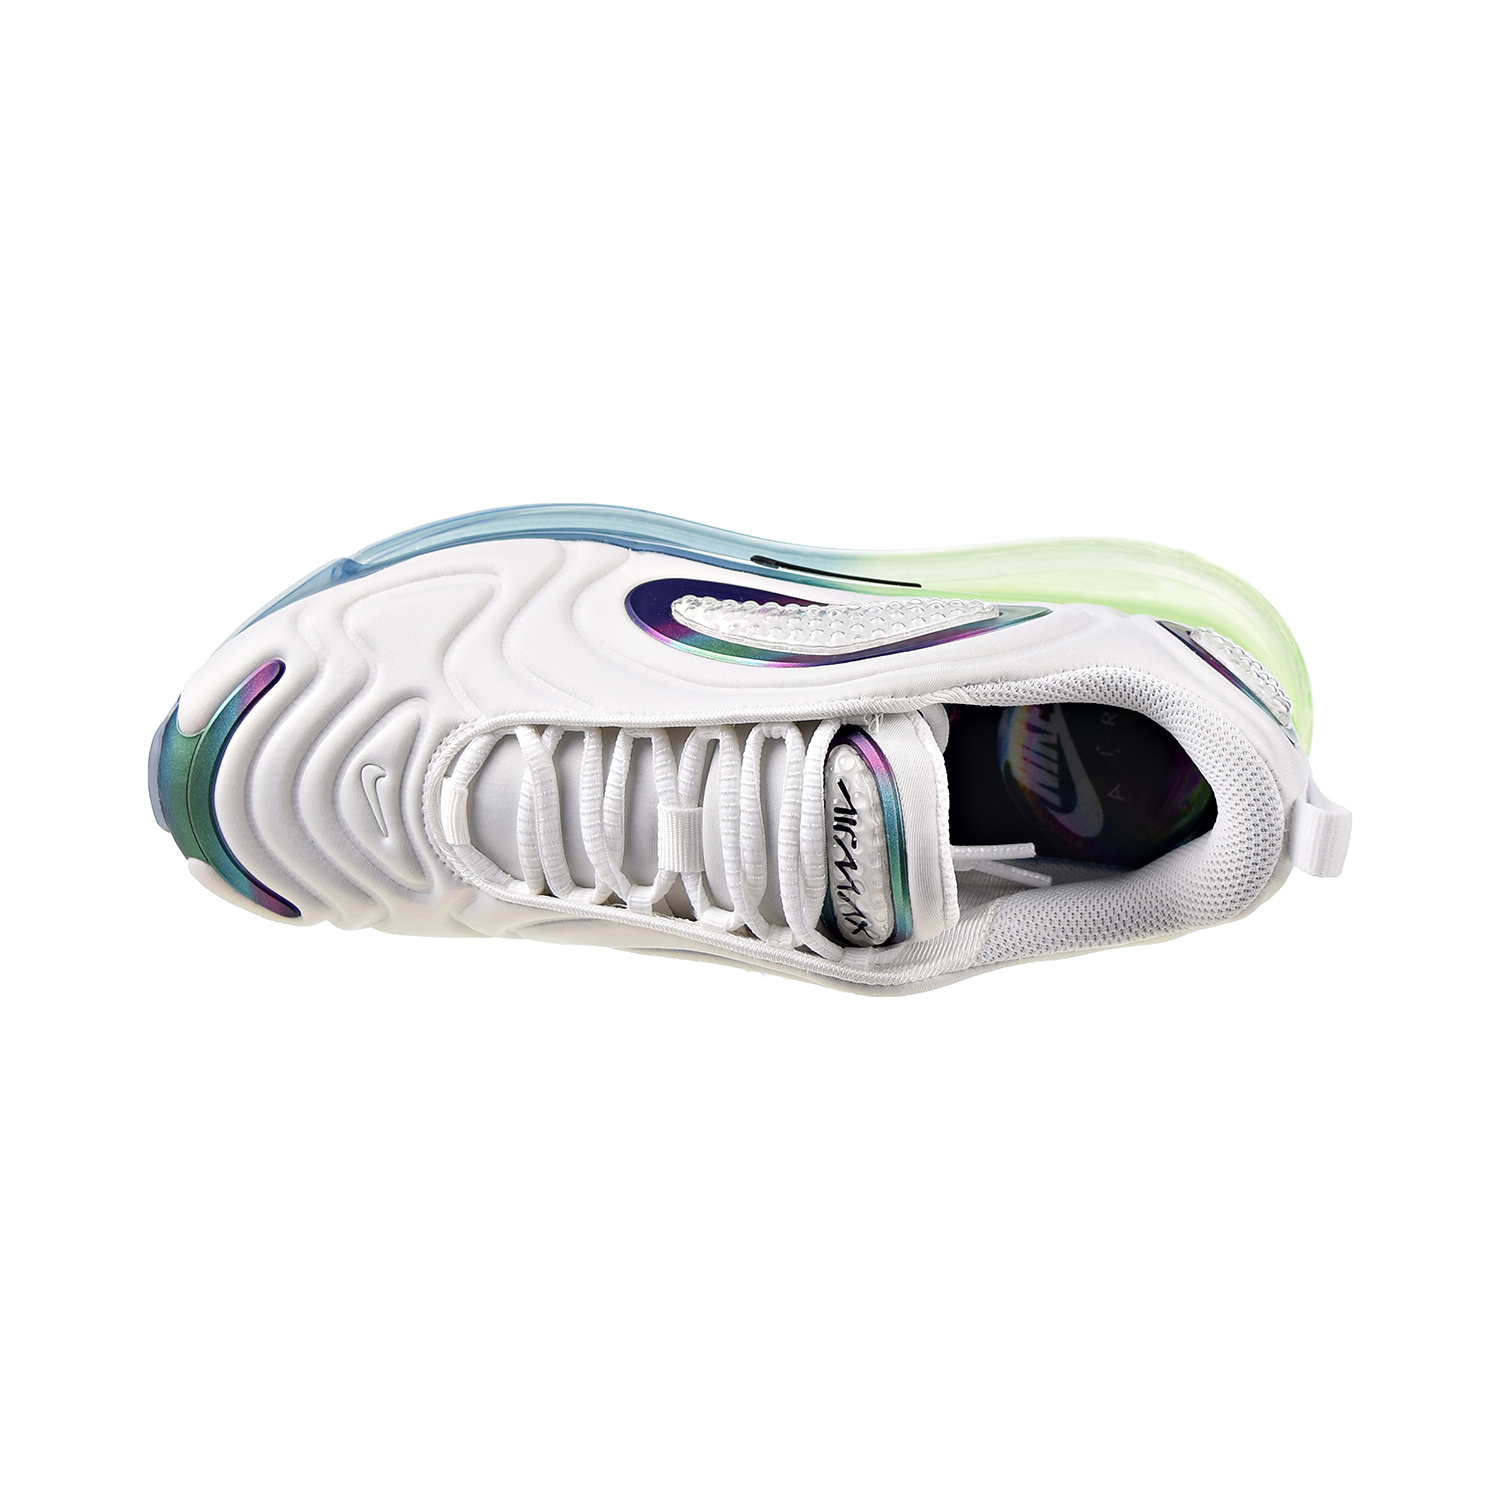 Sea anemone Mince player Nike Air Max 720 Men's Shoes Summit White-Metallic Silver-Black ct5229-100